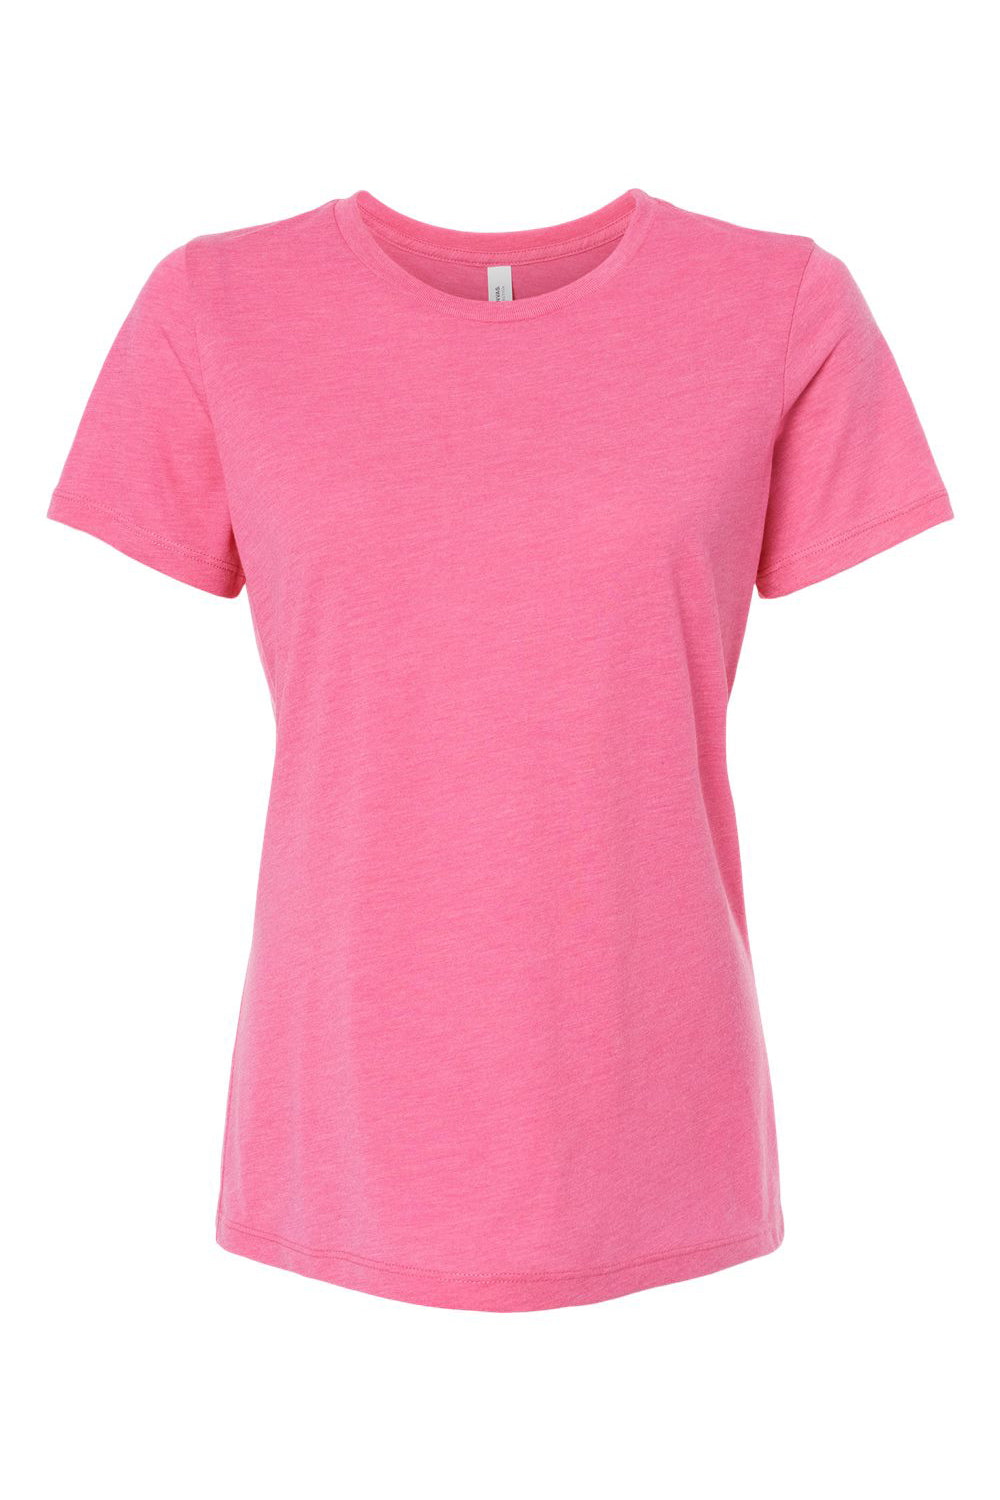 Bella + Canvas BC6413 Womens Short Sleeve Crewneck T-Shirt Charity Pink Flat Front